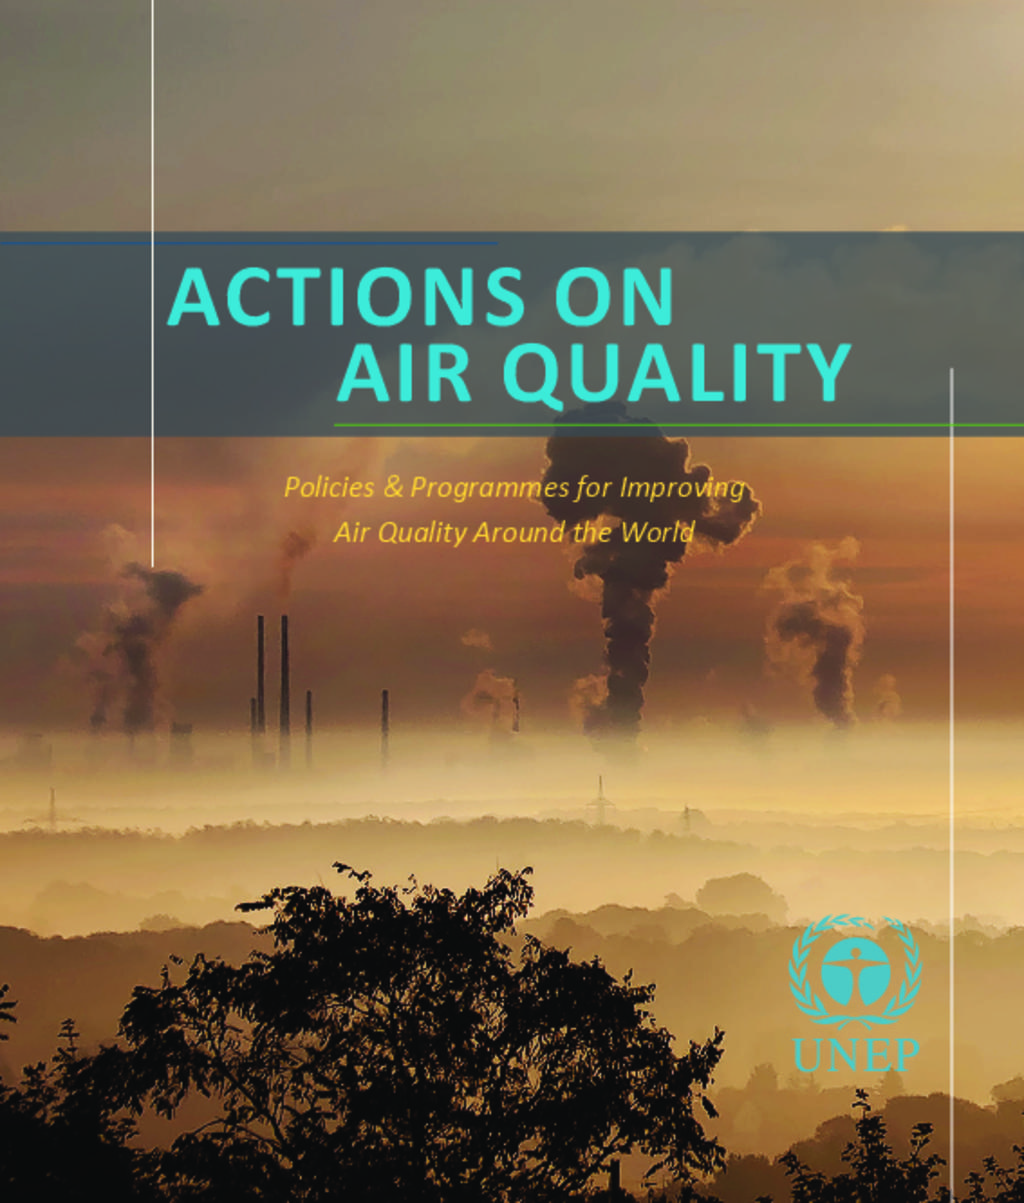 Global Air quality